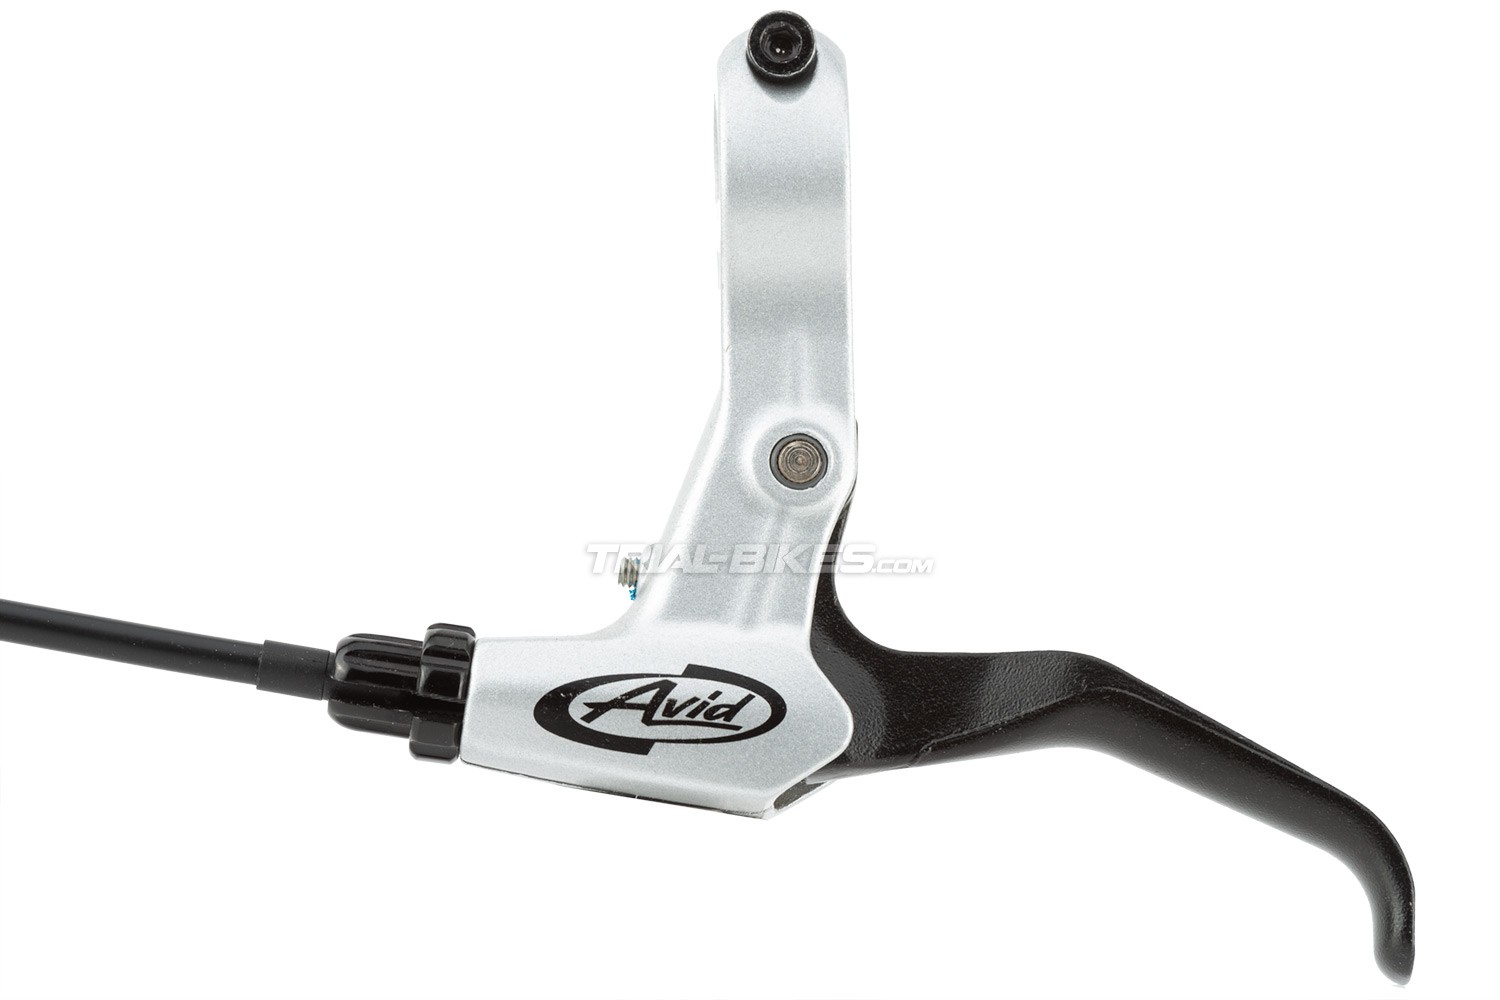 Nuevo Cable Avid BB5 Mountain Bike Freno de Disco Negro CPS Rotor/soporte se vende por separado 